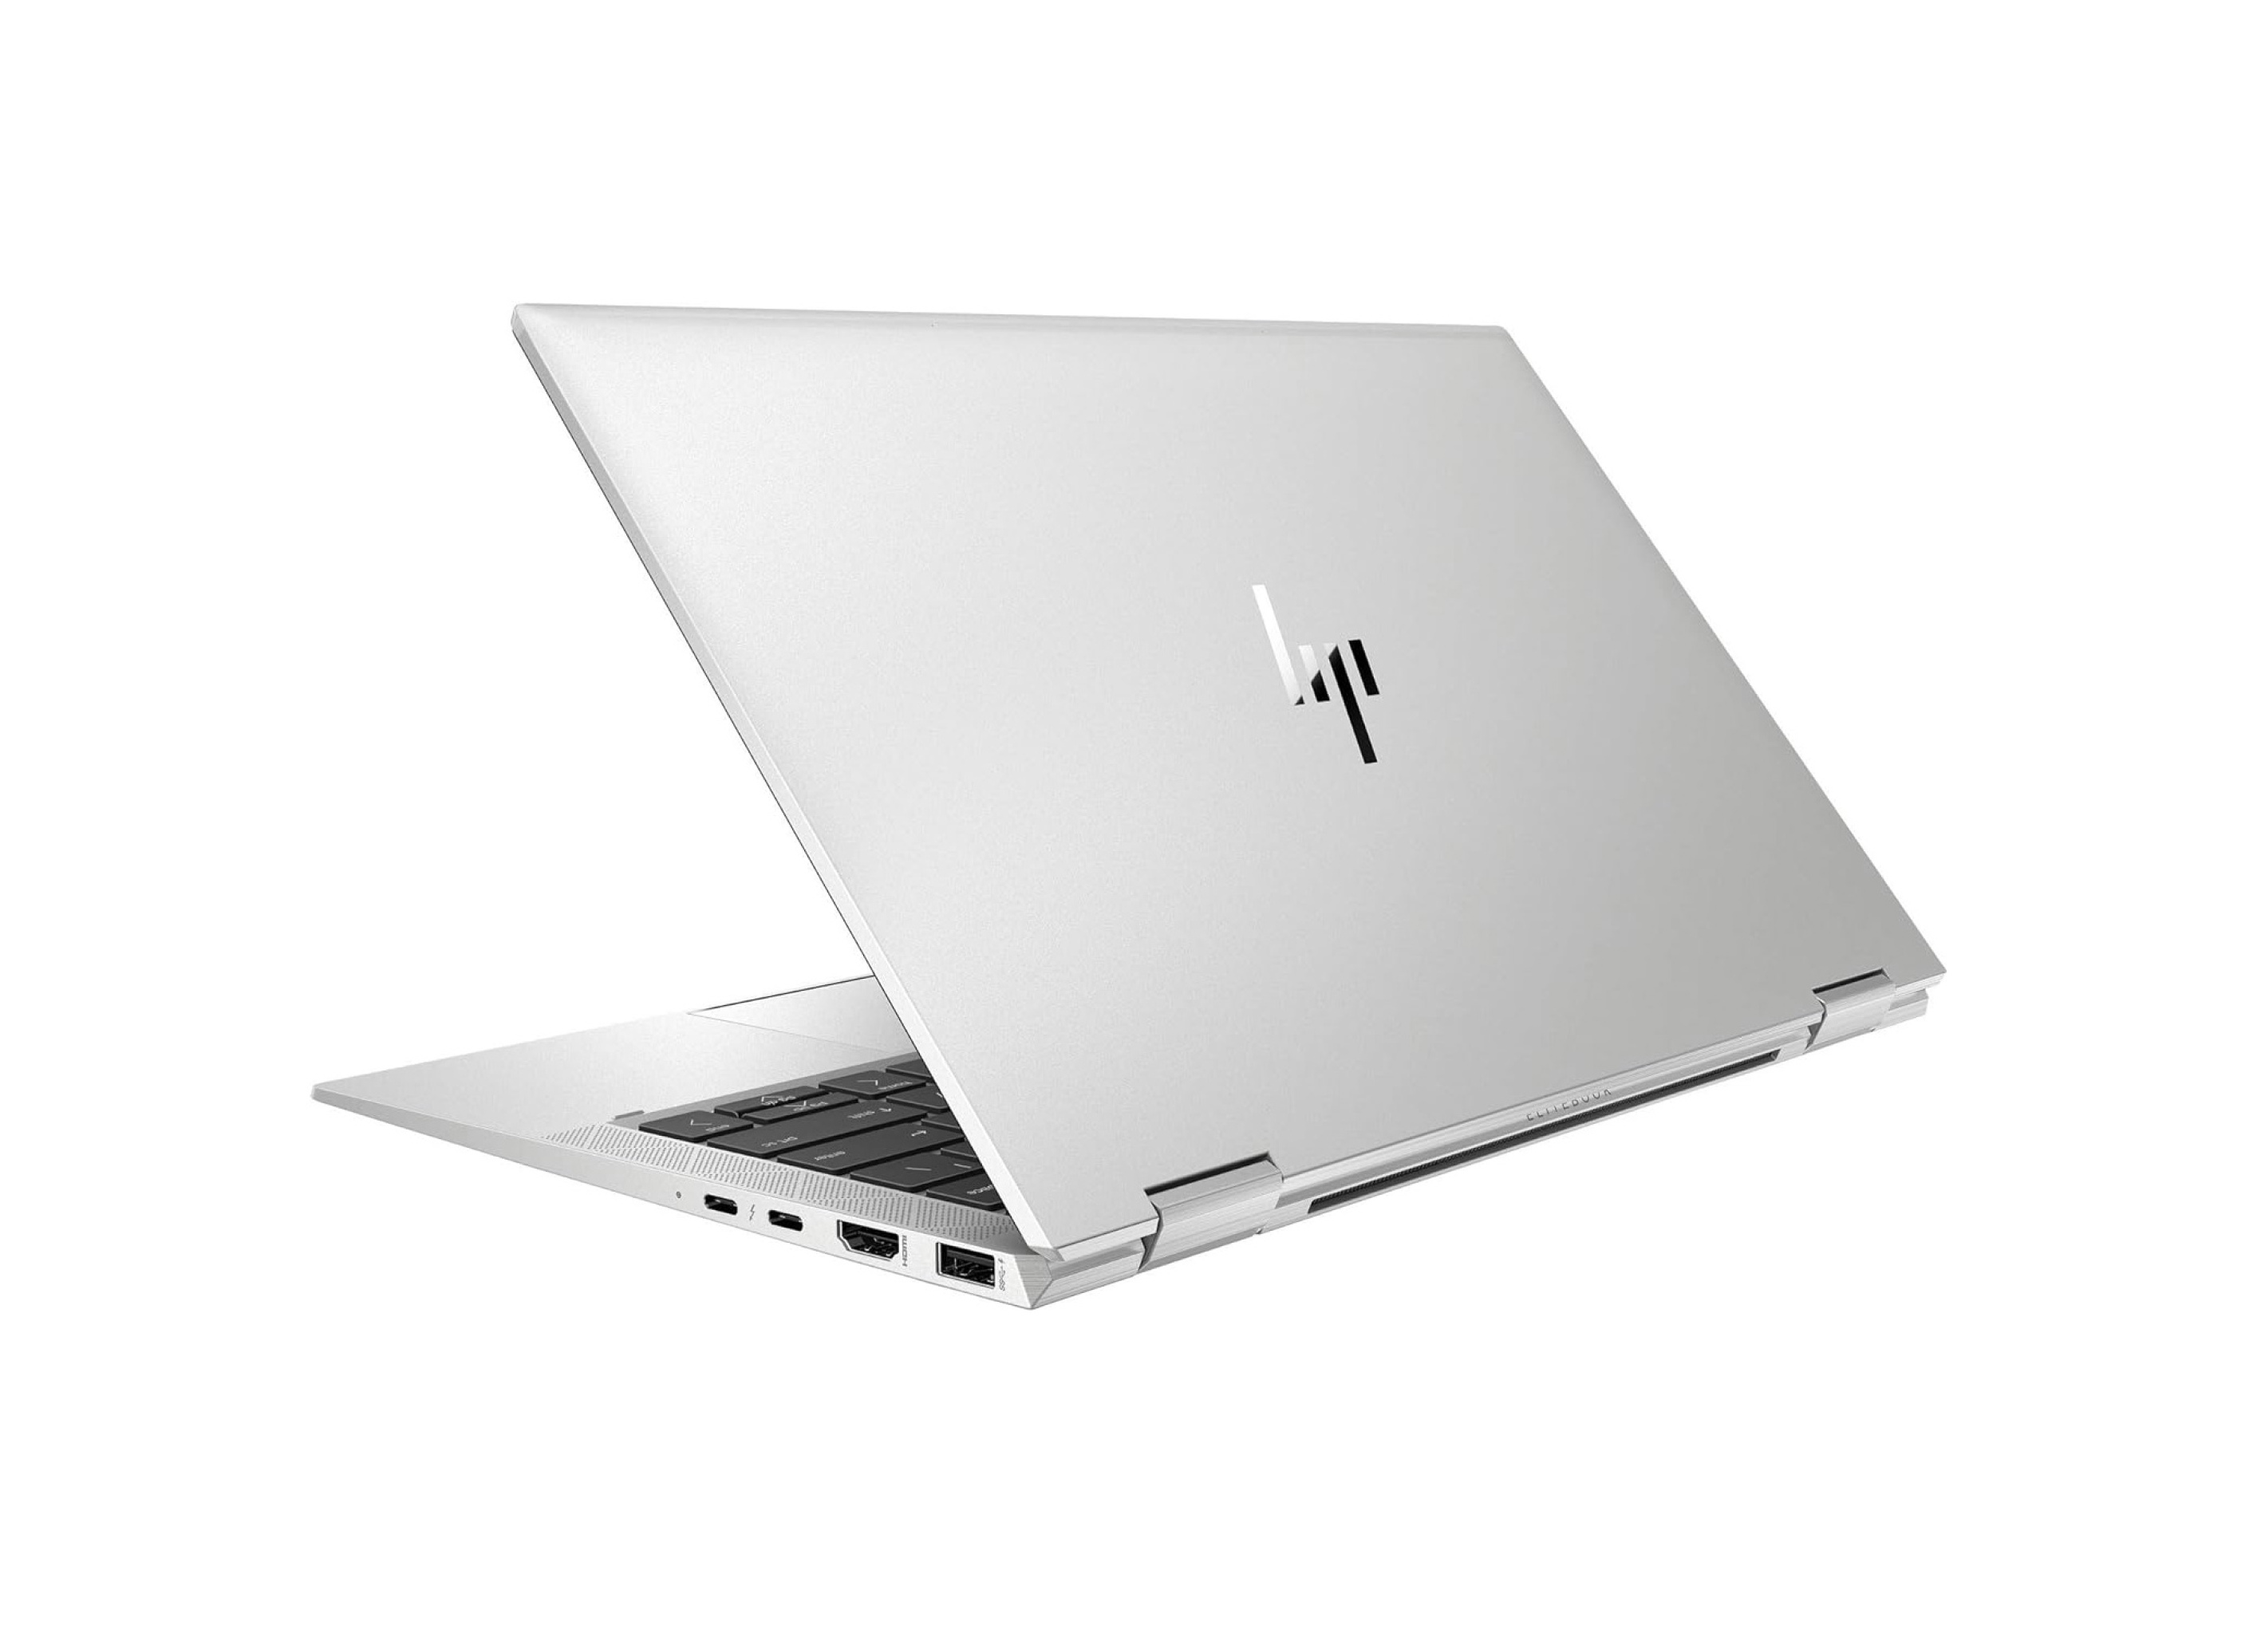  خرید و قیمت لپ تاپ HP Elite 1040 G7 X360 i7 10th gen | لاکچری لپ تاپ 